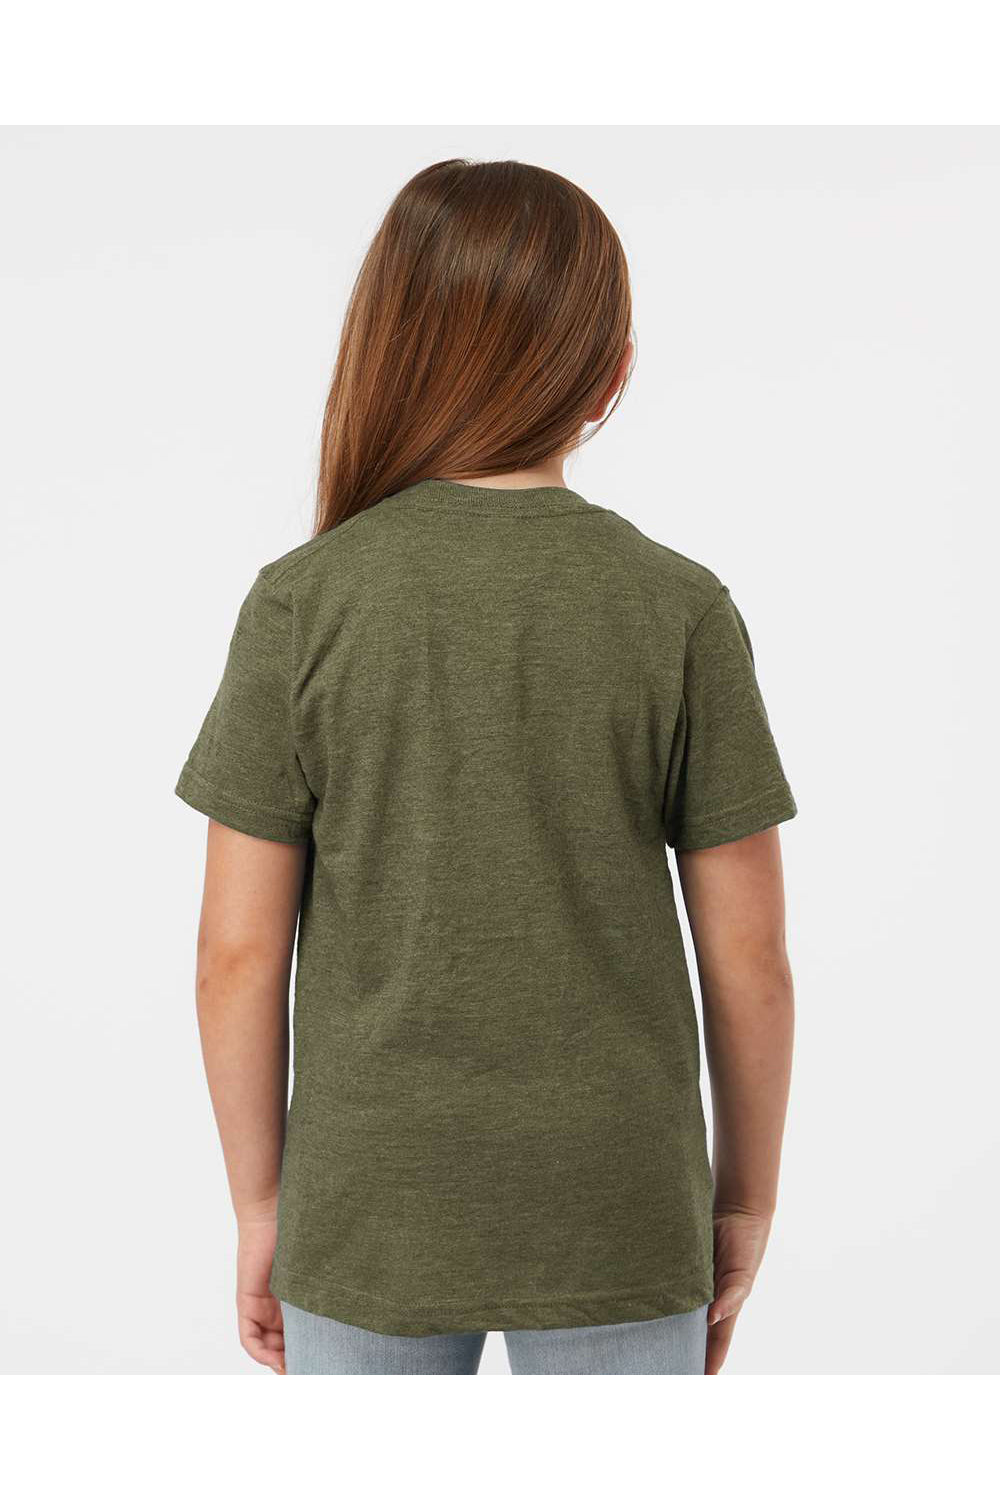 Tultex 235 Youth Fine Jersey Short Sleeve Crewneck T-Shirt Heather Military Green Model Back